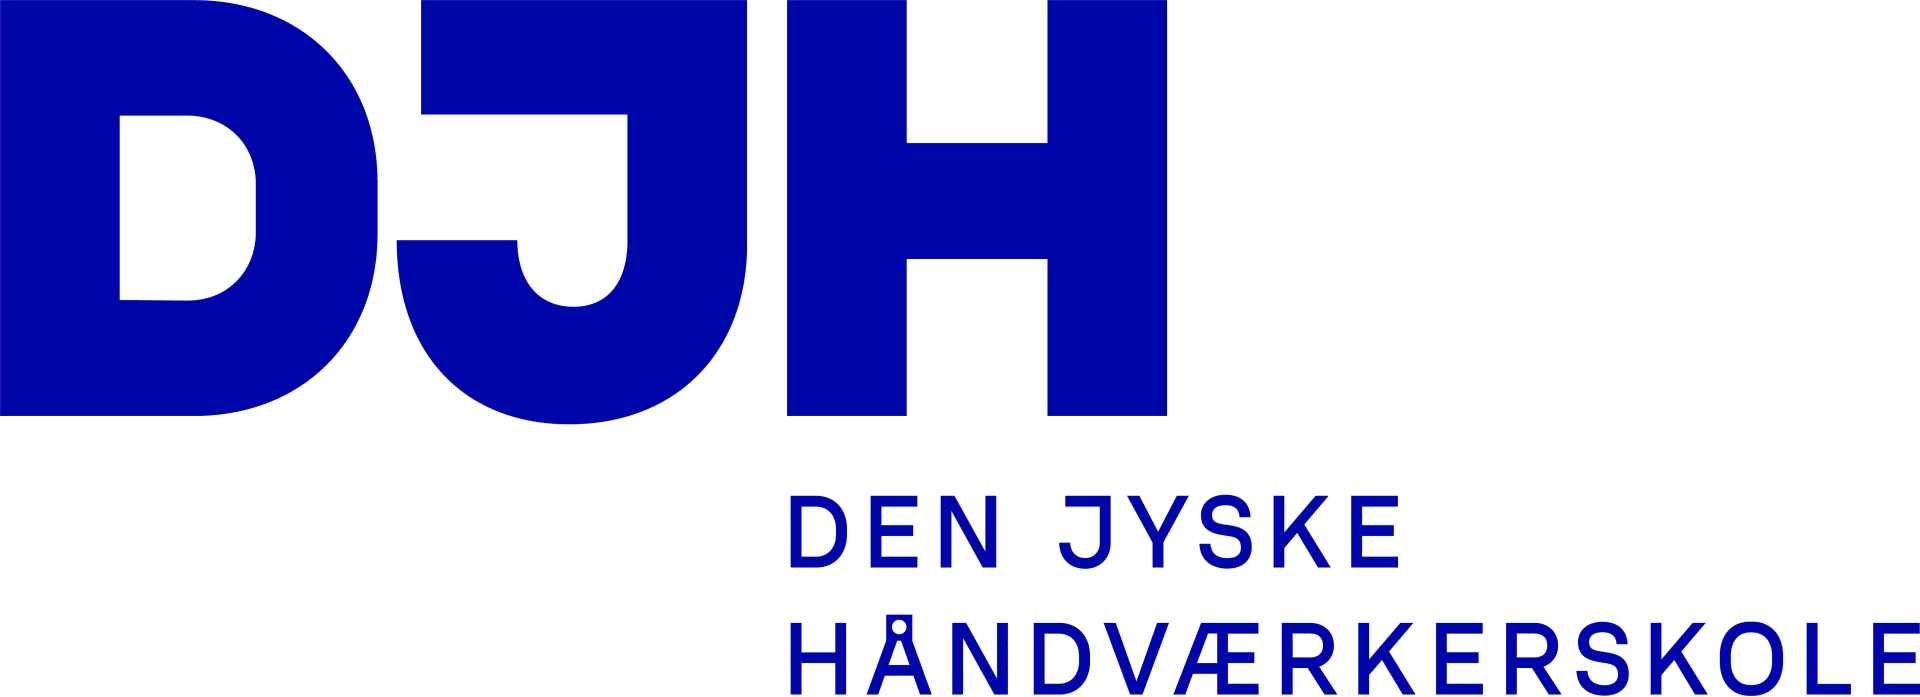 Den Jyske Håndværkerskole logo